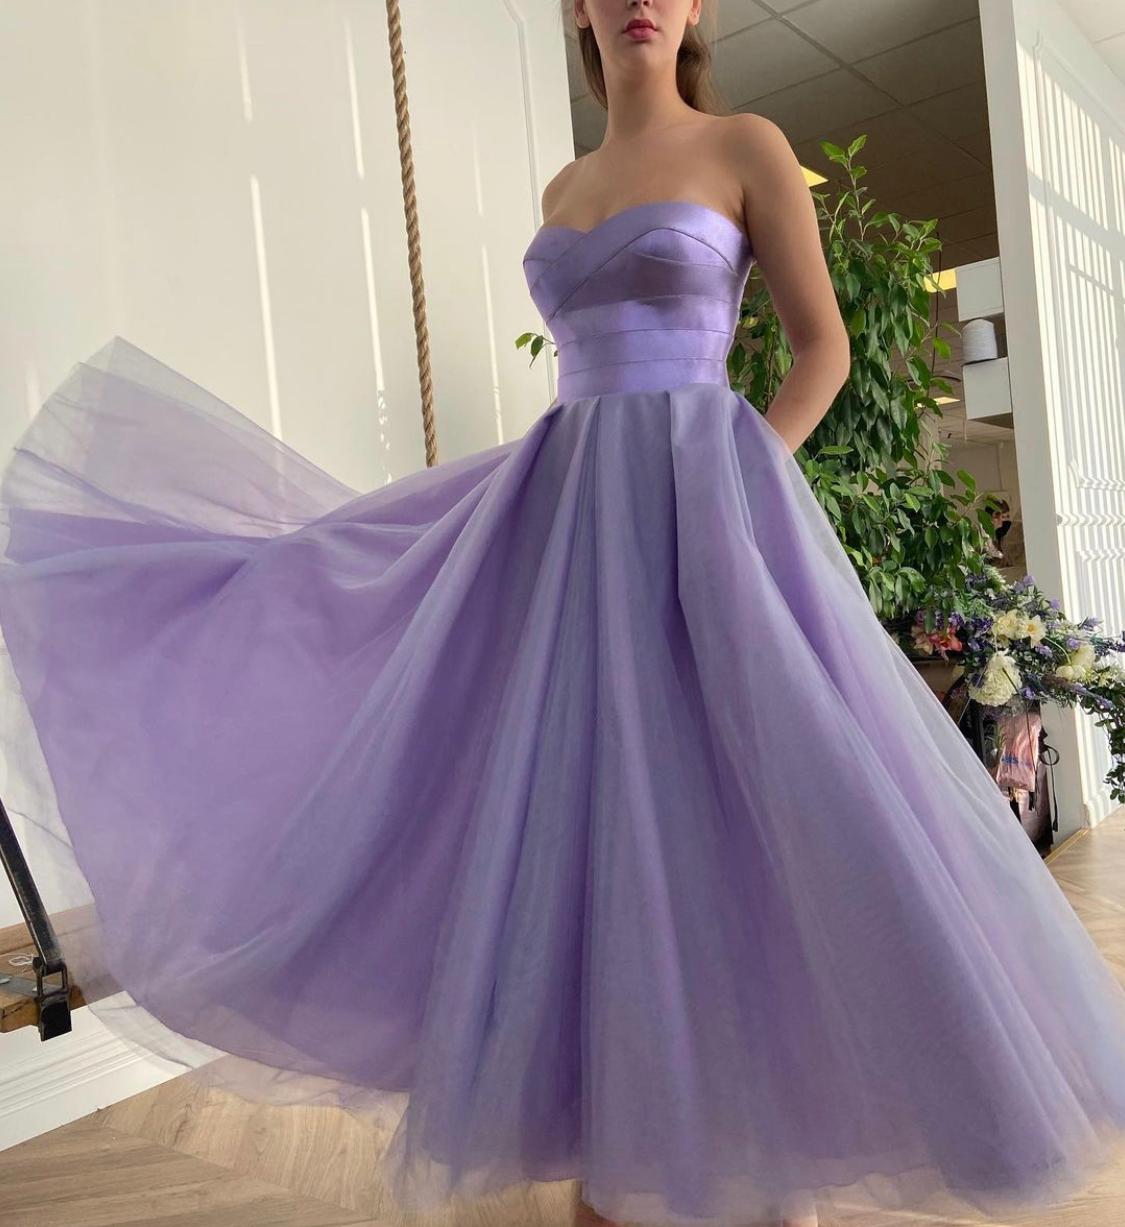 Purple midi dress with no sleeves